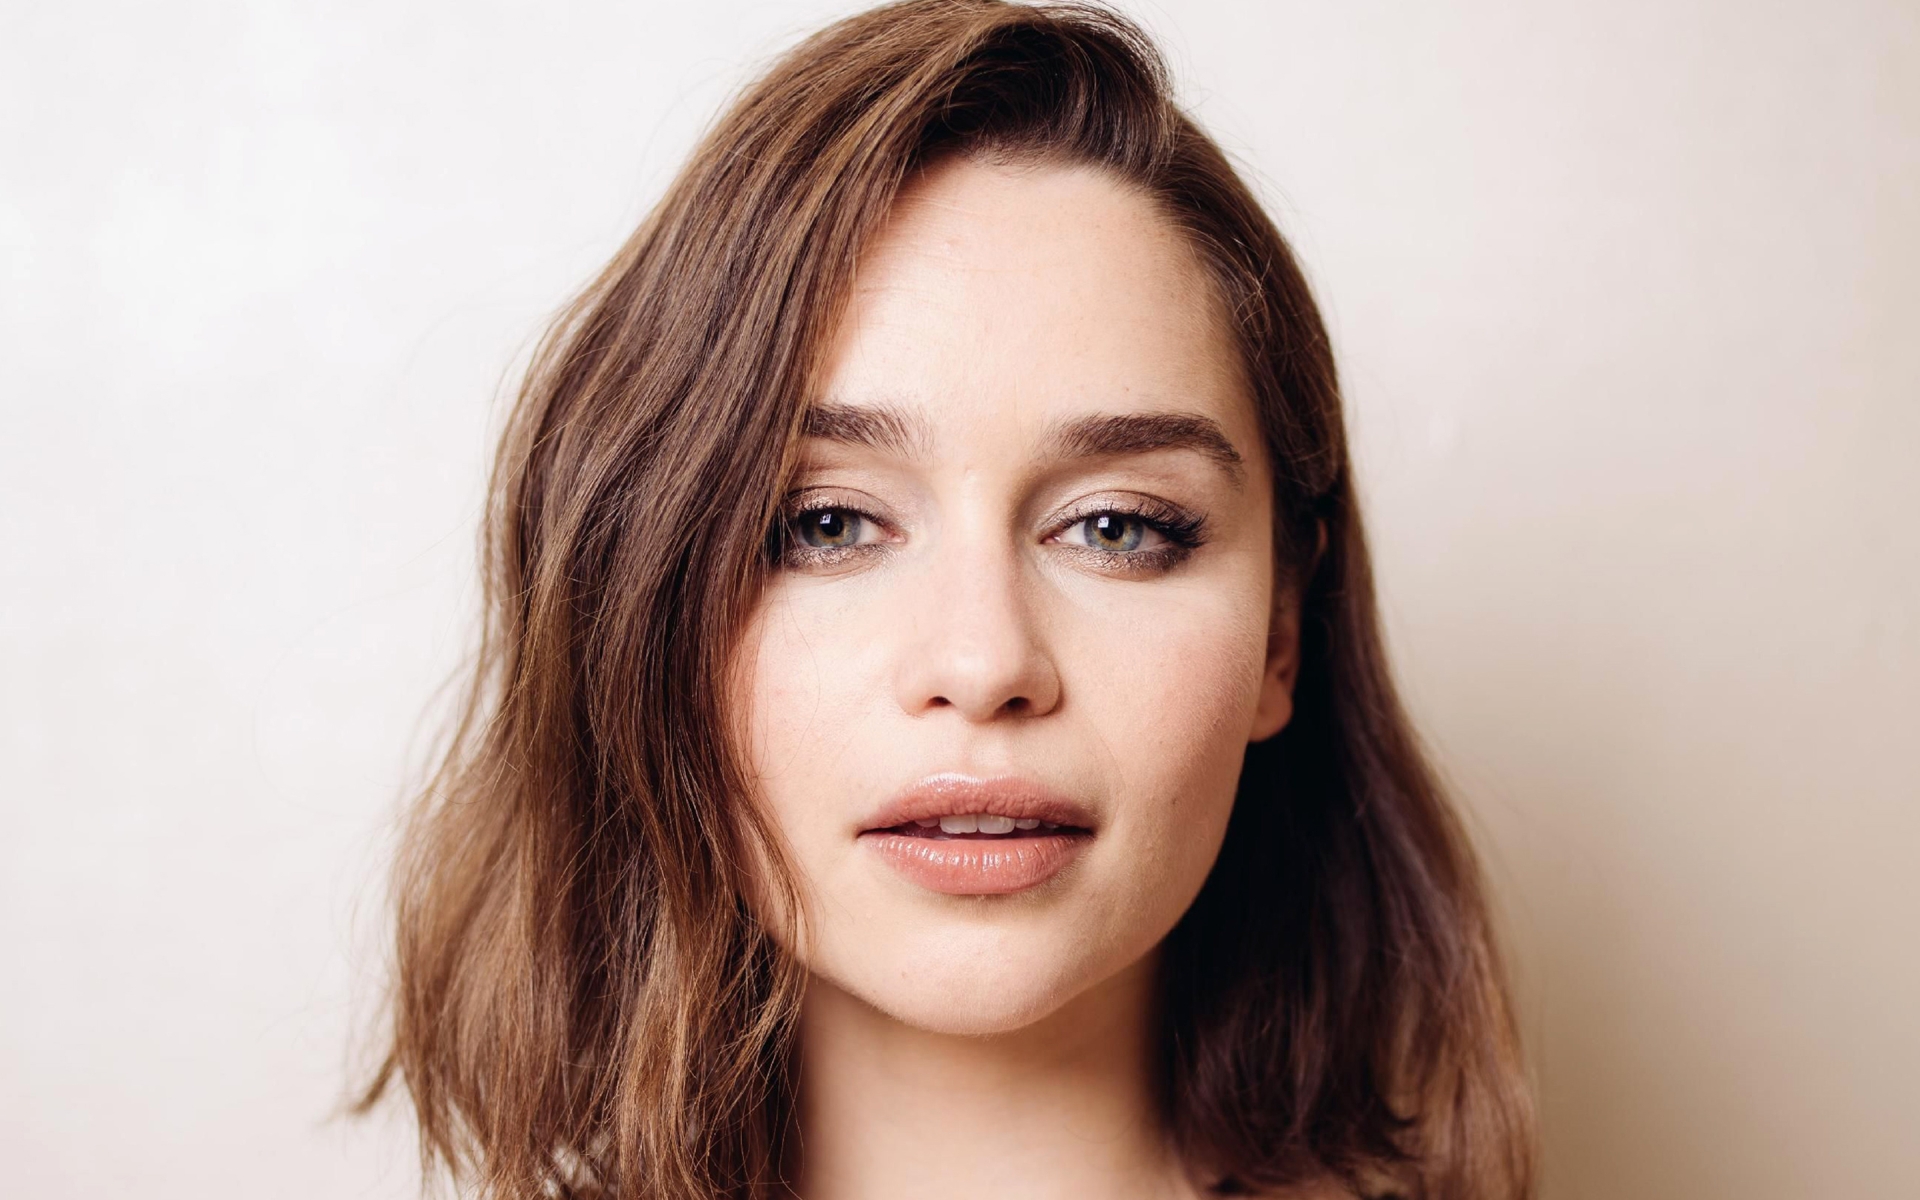 Emilia Clarke Cute Face for 1920 x 1200 widescreen resolution